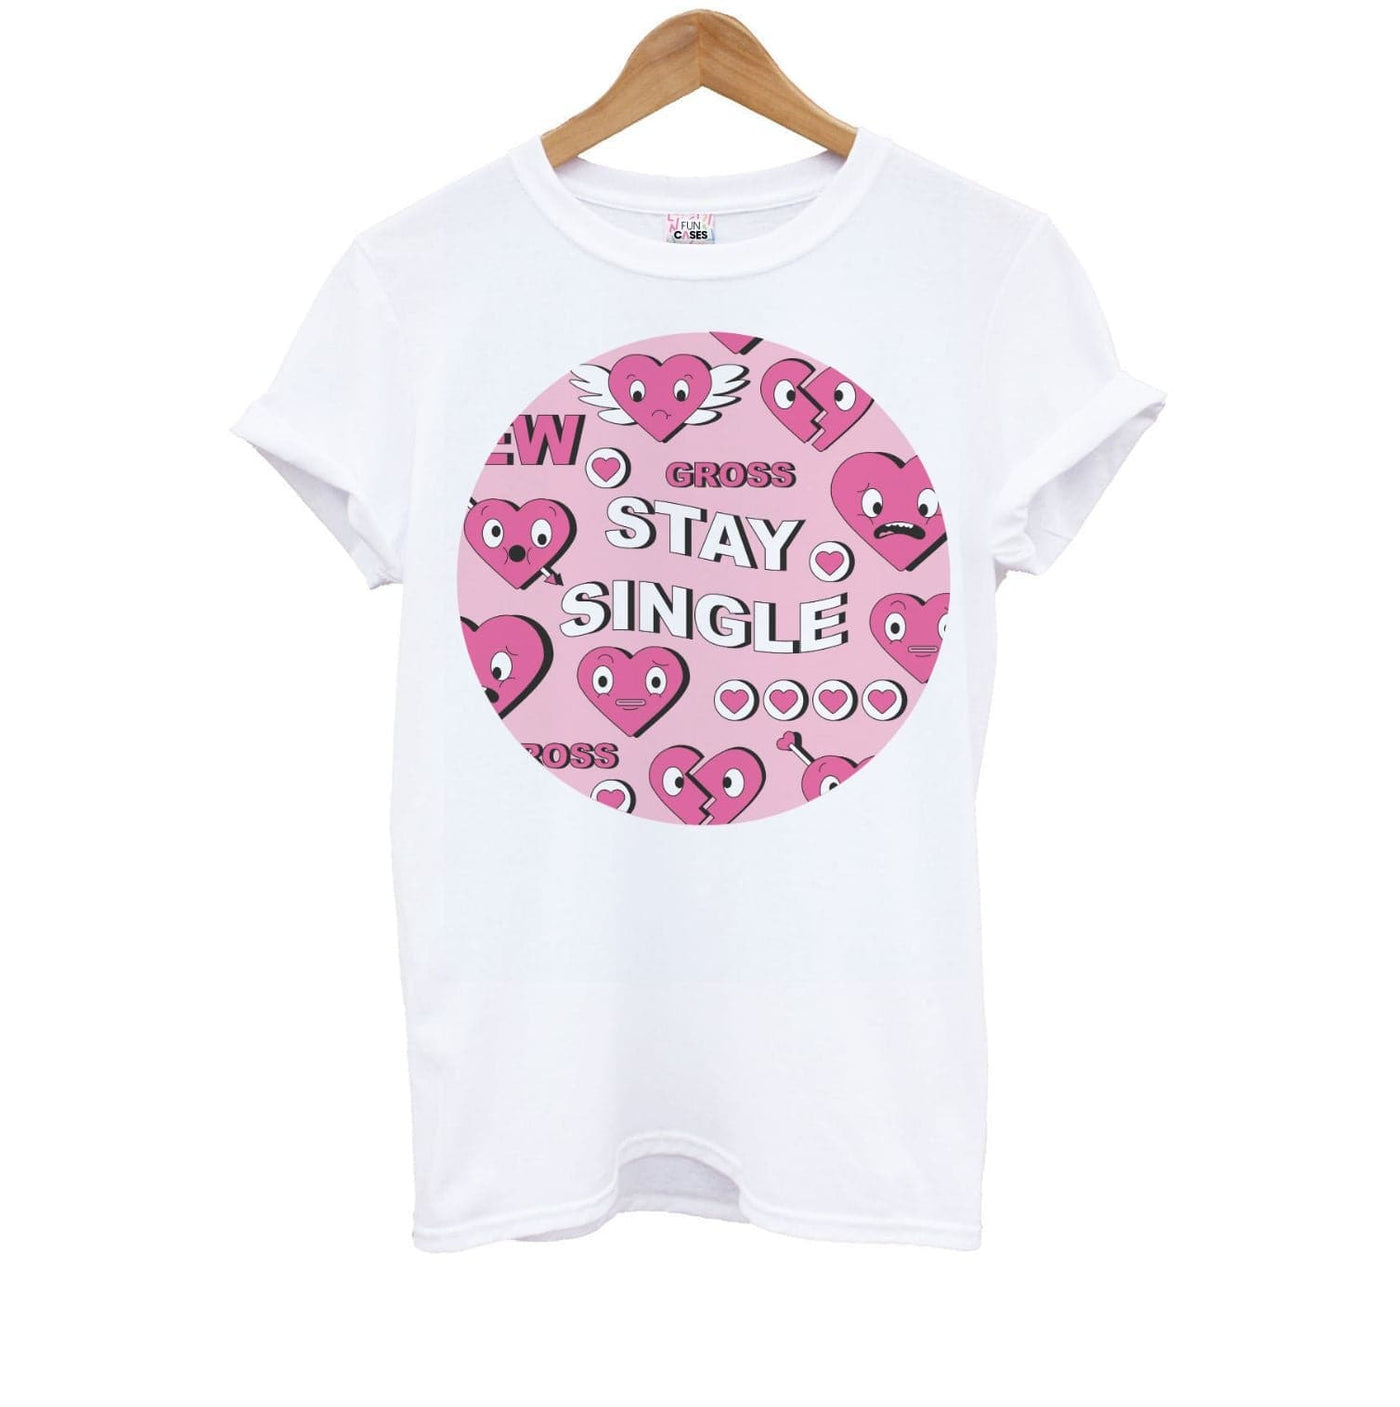 Stay Single - Valentine's Day Kids T-Shirt